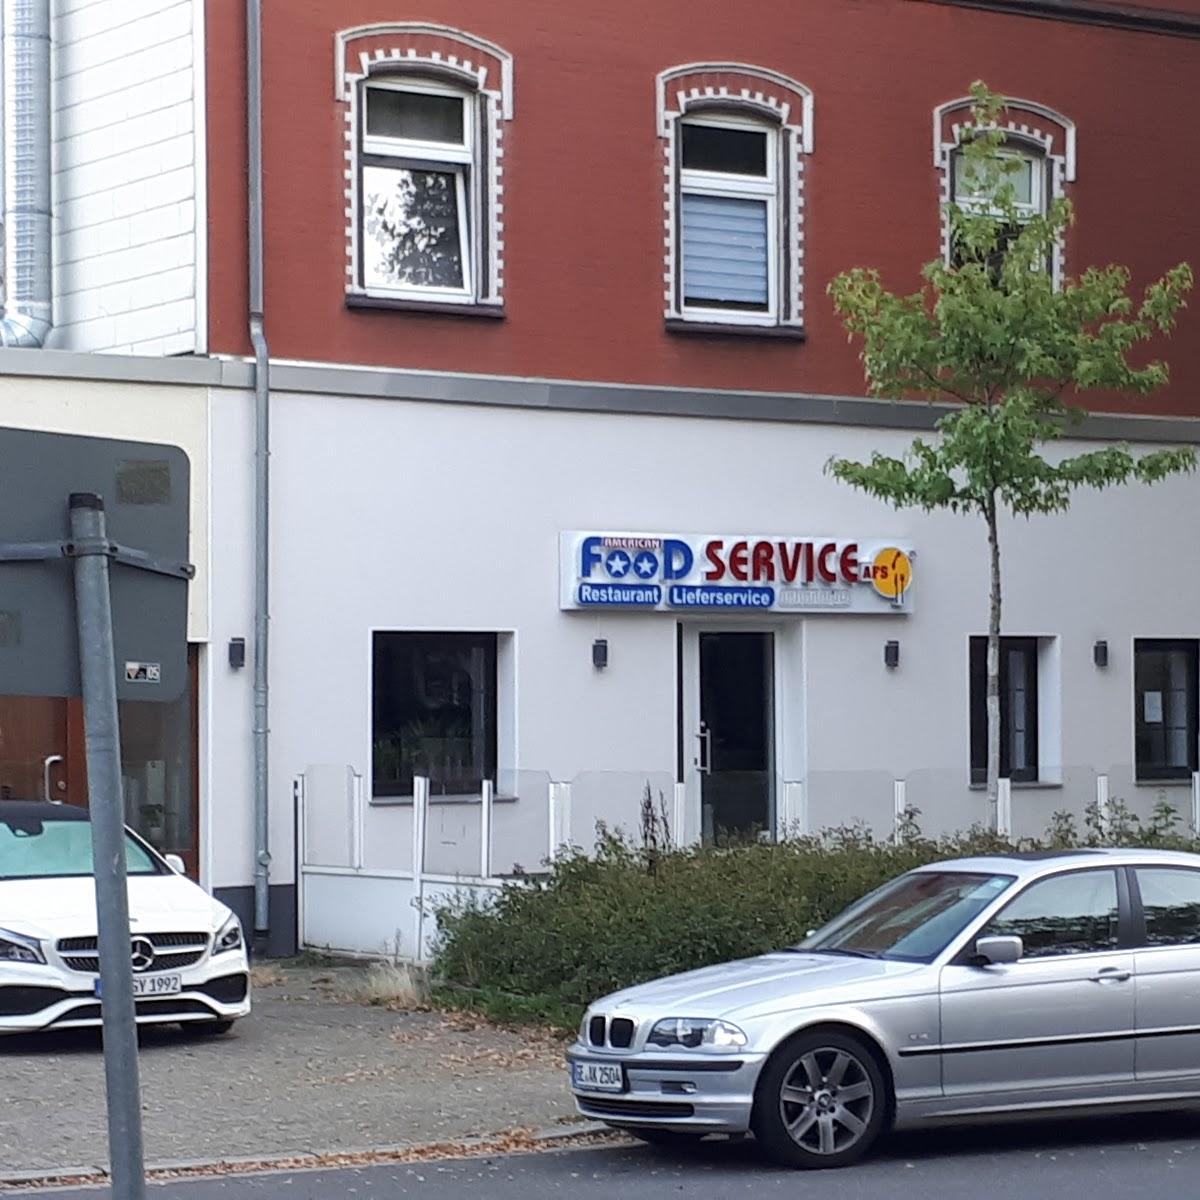 Restaurant "American Food Service" in Gelsenkirchen